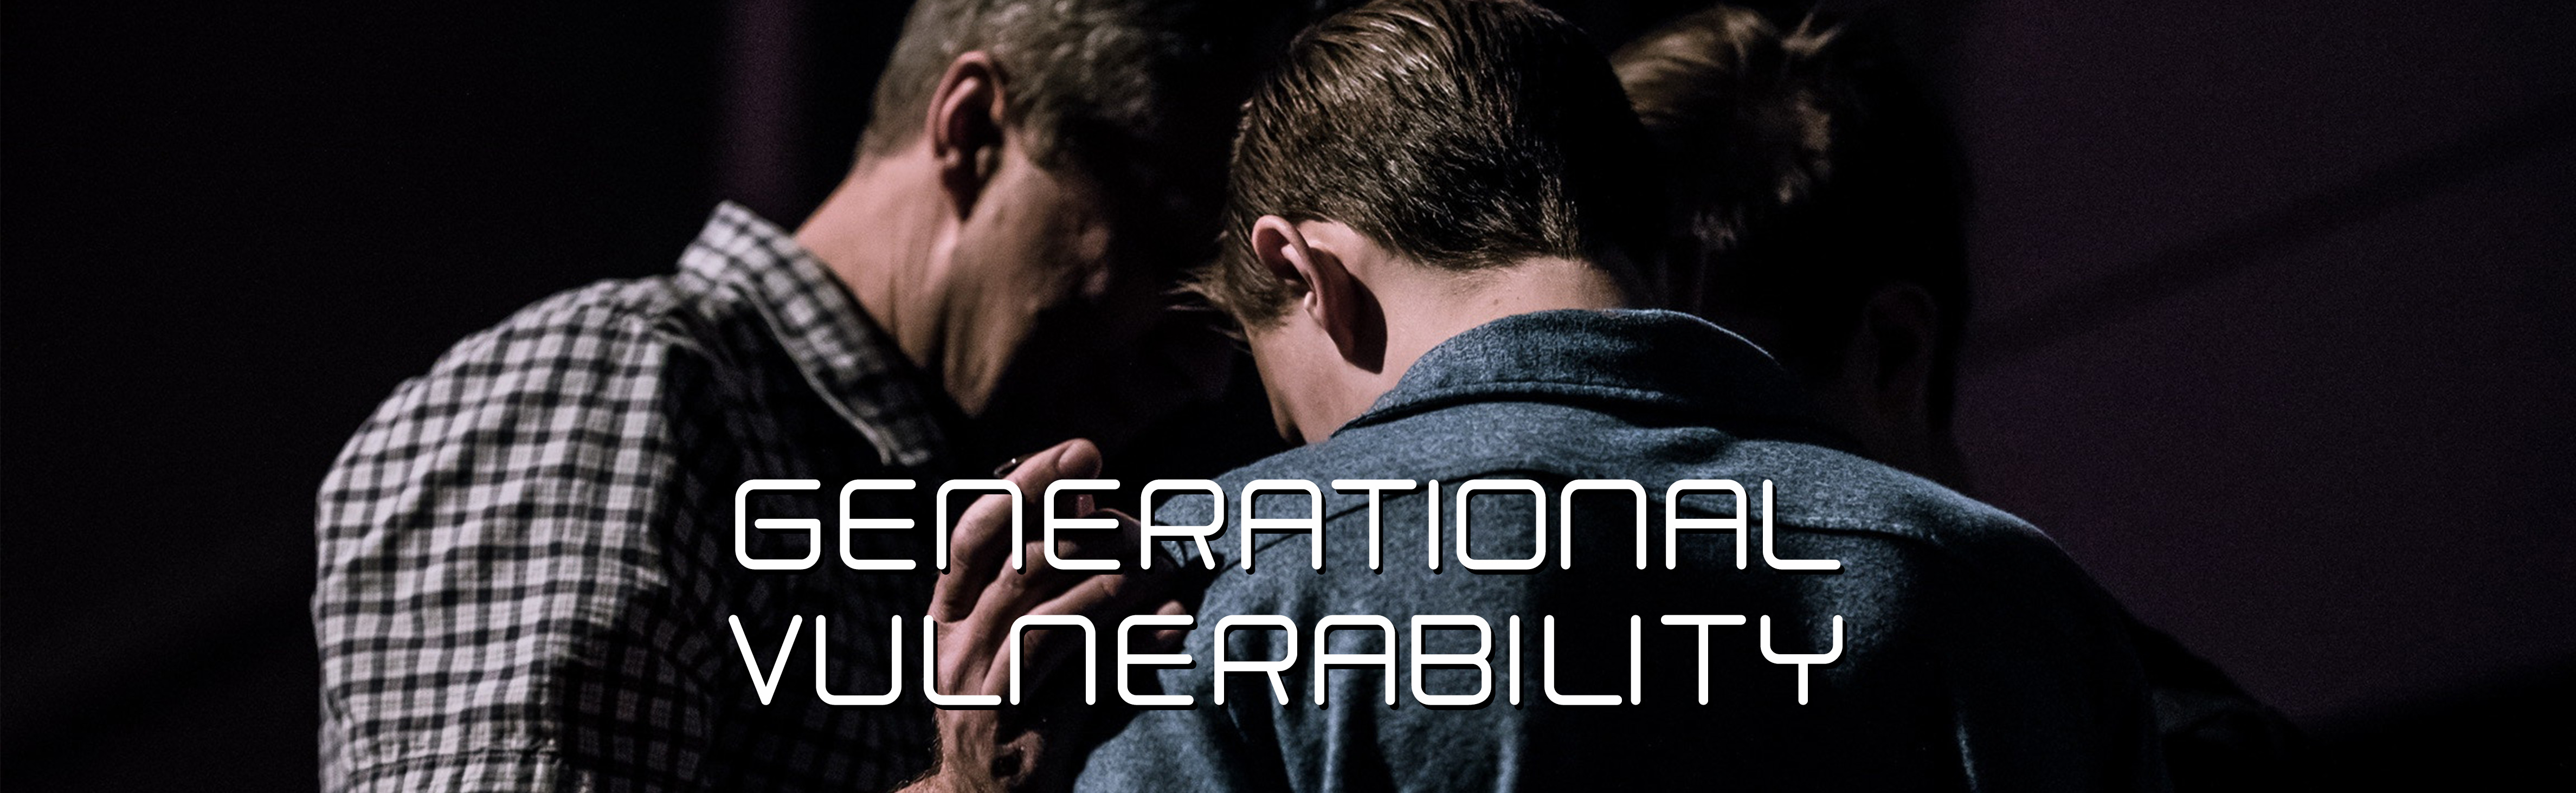 Generational Vulnerability